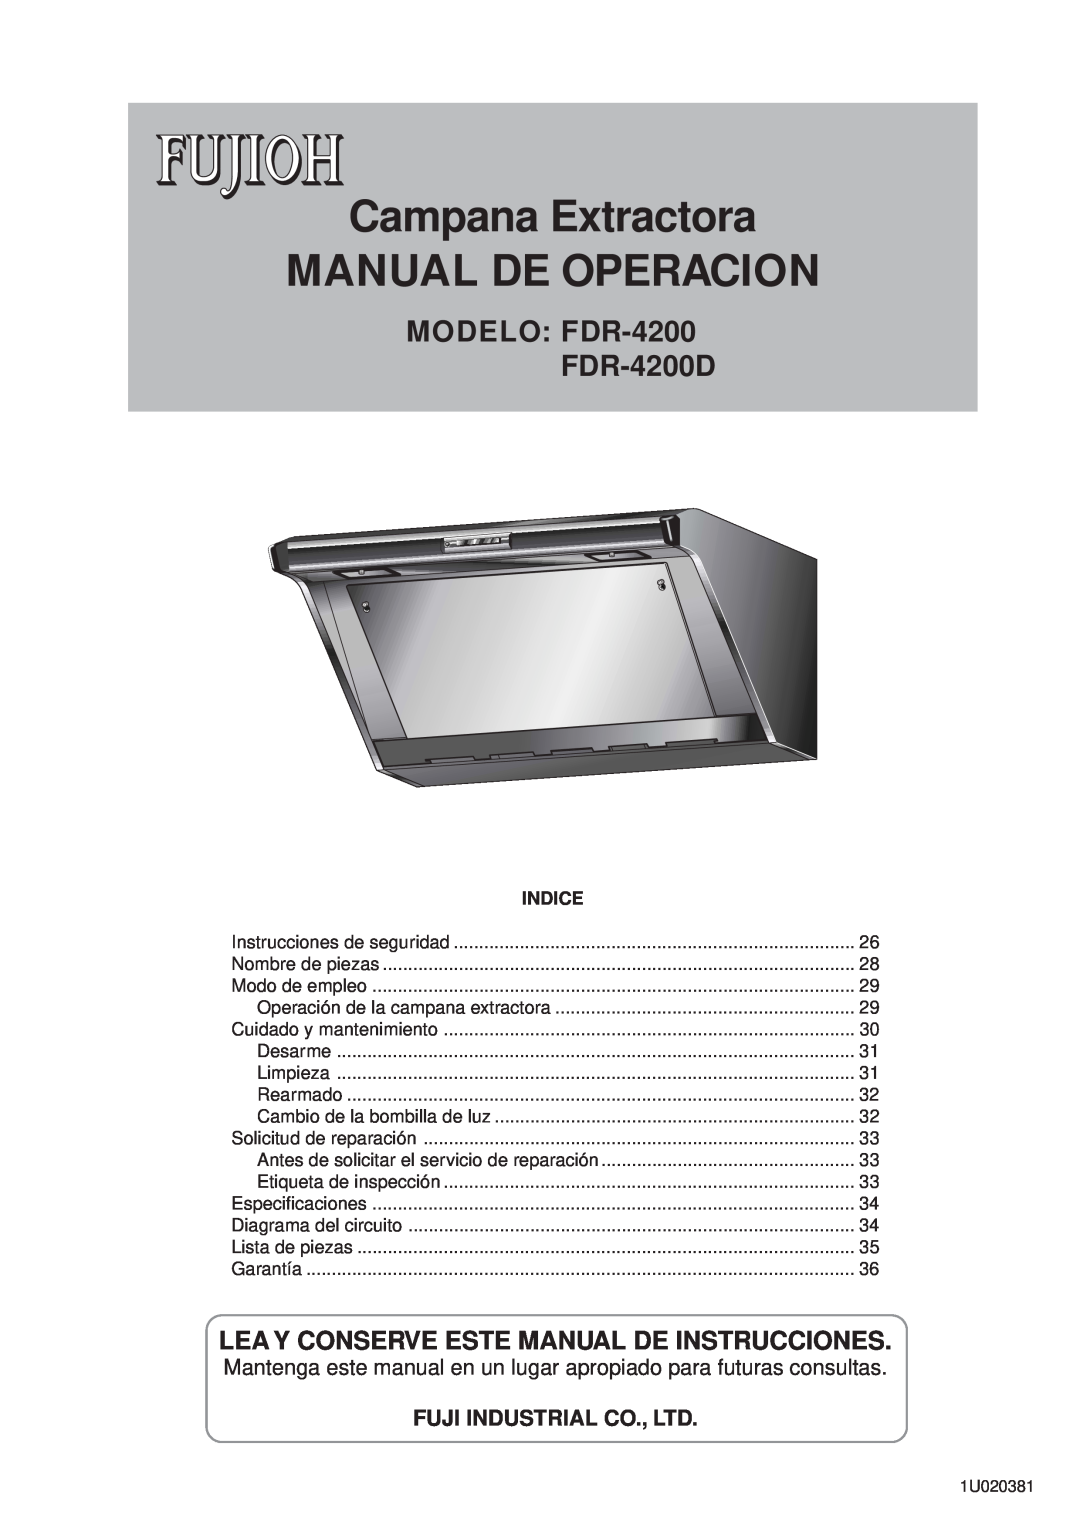 Fujioh Campana Extractora MANUAL DE OPERACION, MODELO FDR-4200 FDR-4200D, Lea Y Conserve Este Manual De Instrucciones 